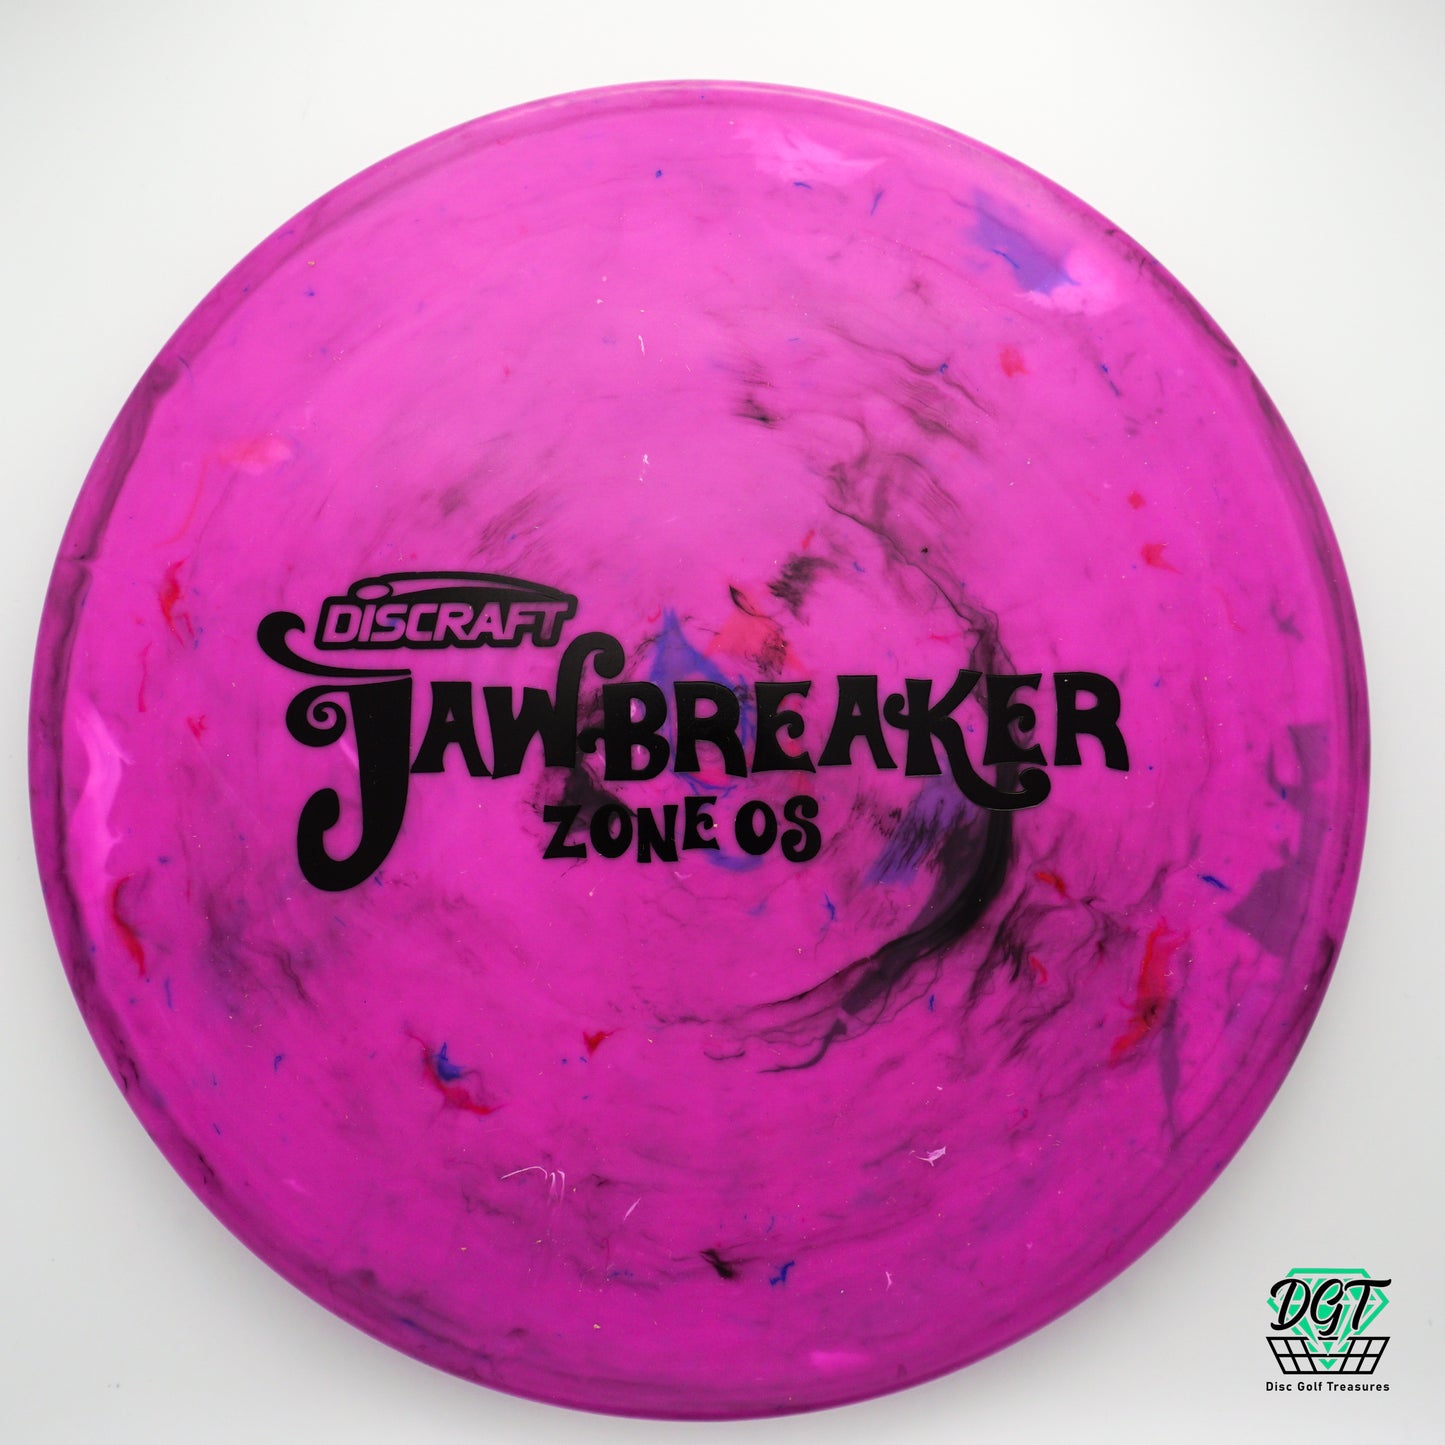 Jawbreaker Zone OS